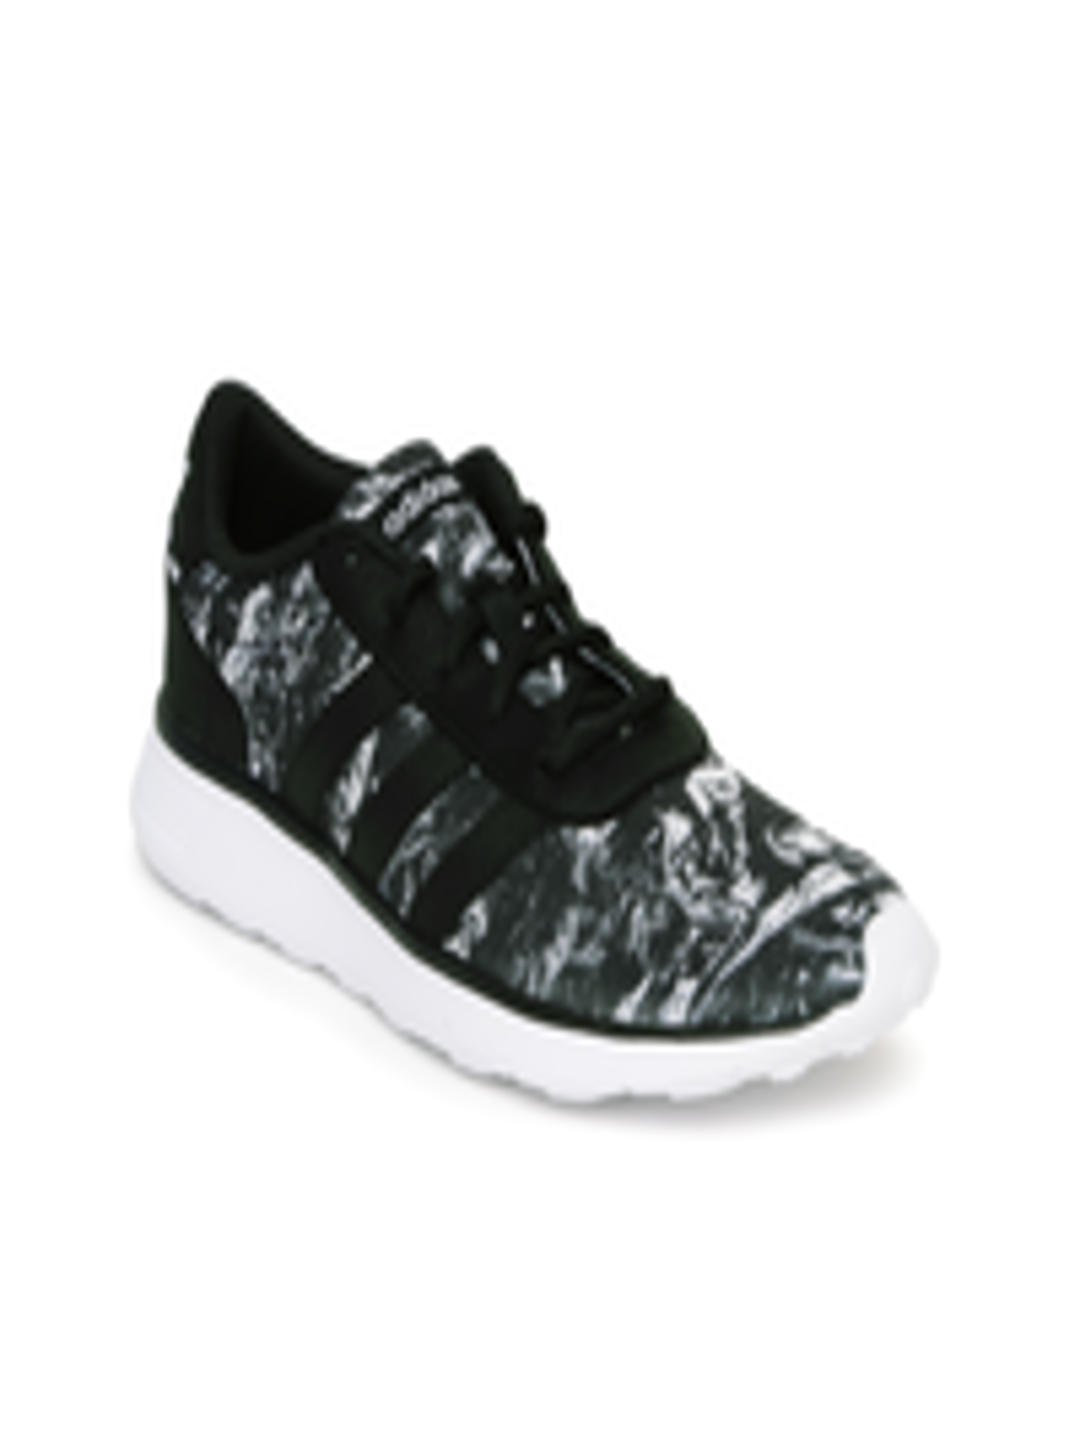 Buy ADIDAS NEO Women Black Printed Lite Racer Sneakers - Casual Shoes ...